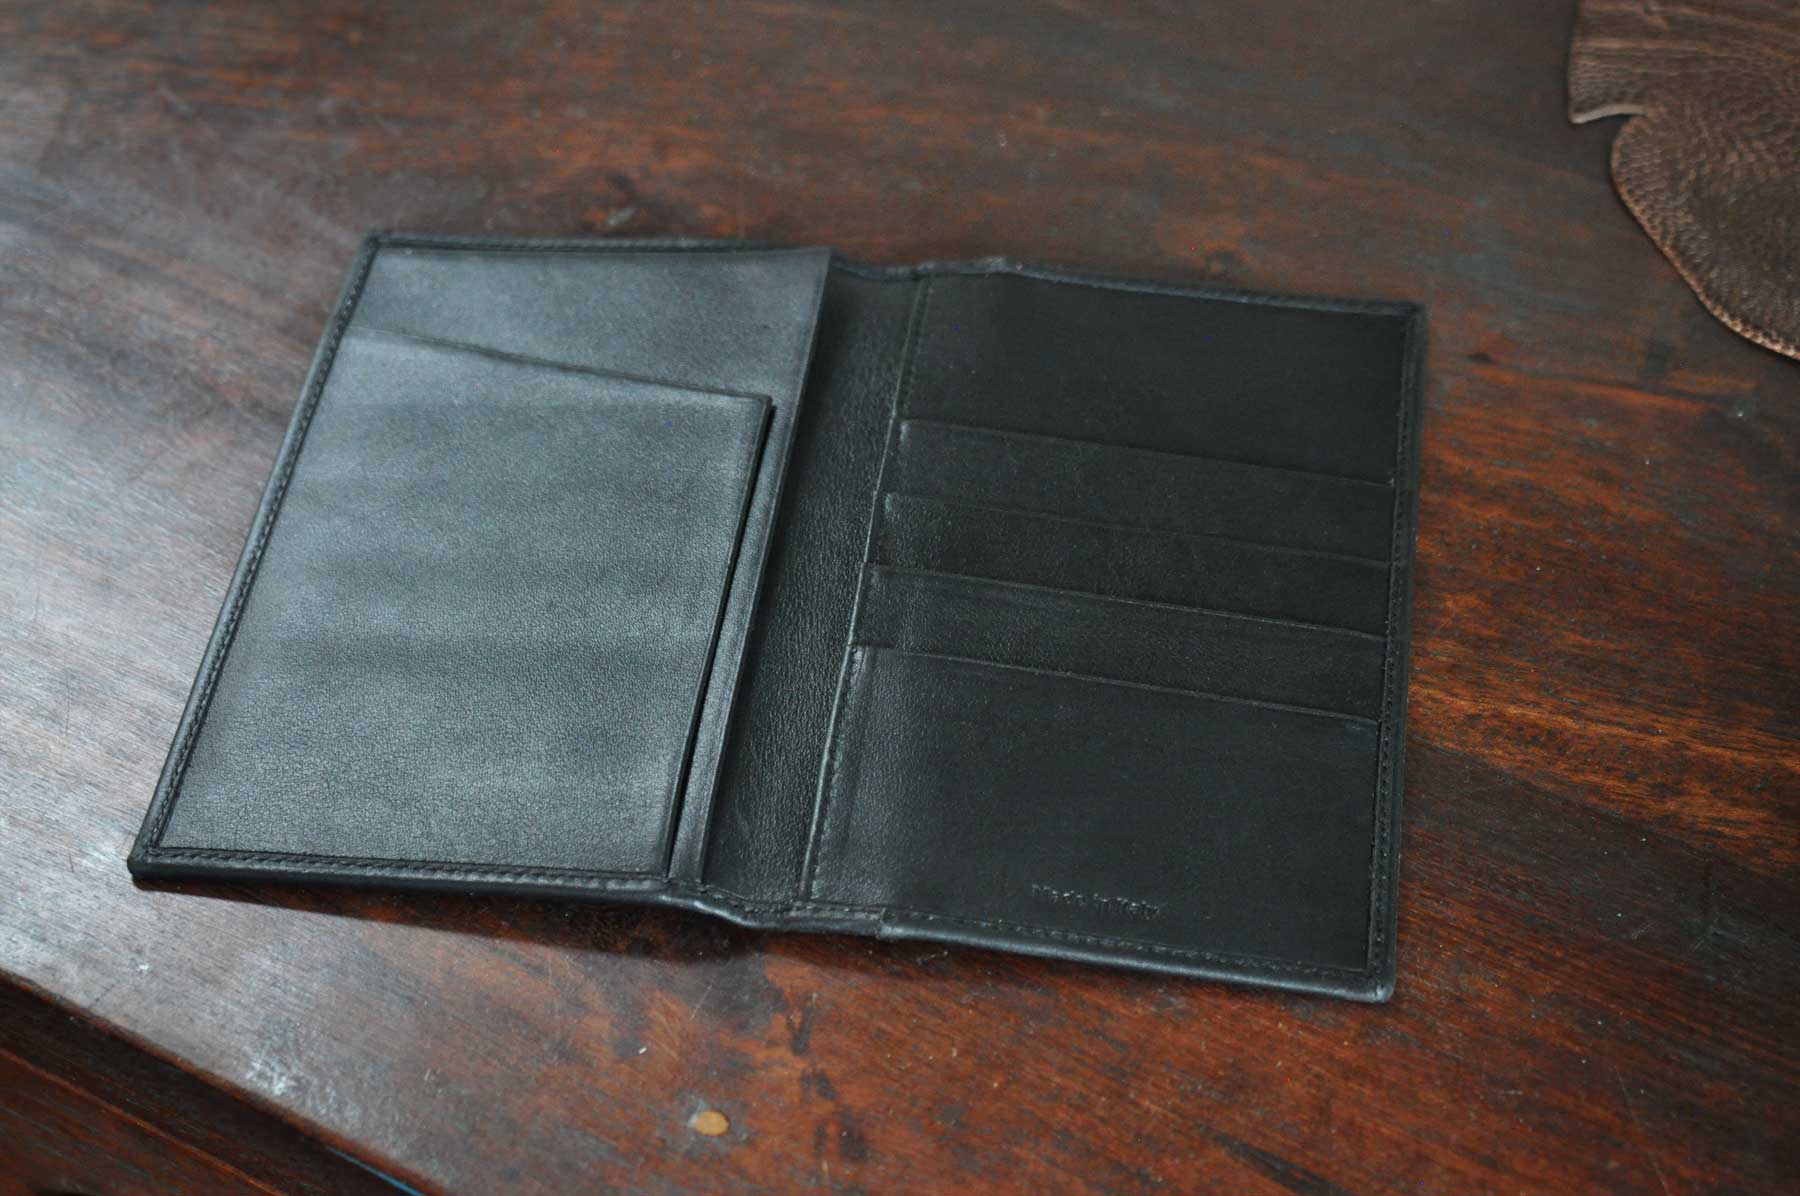 Leather Money Clip Wallet - Ostrich - Onyx Black - Borlino